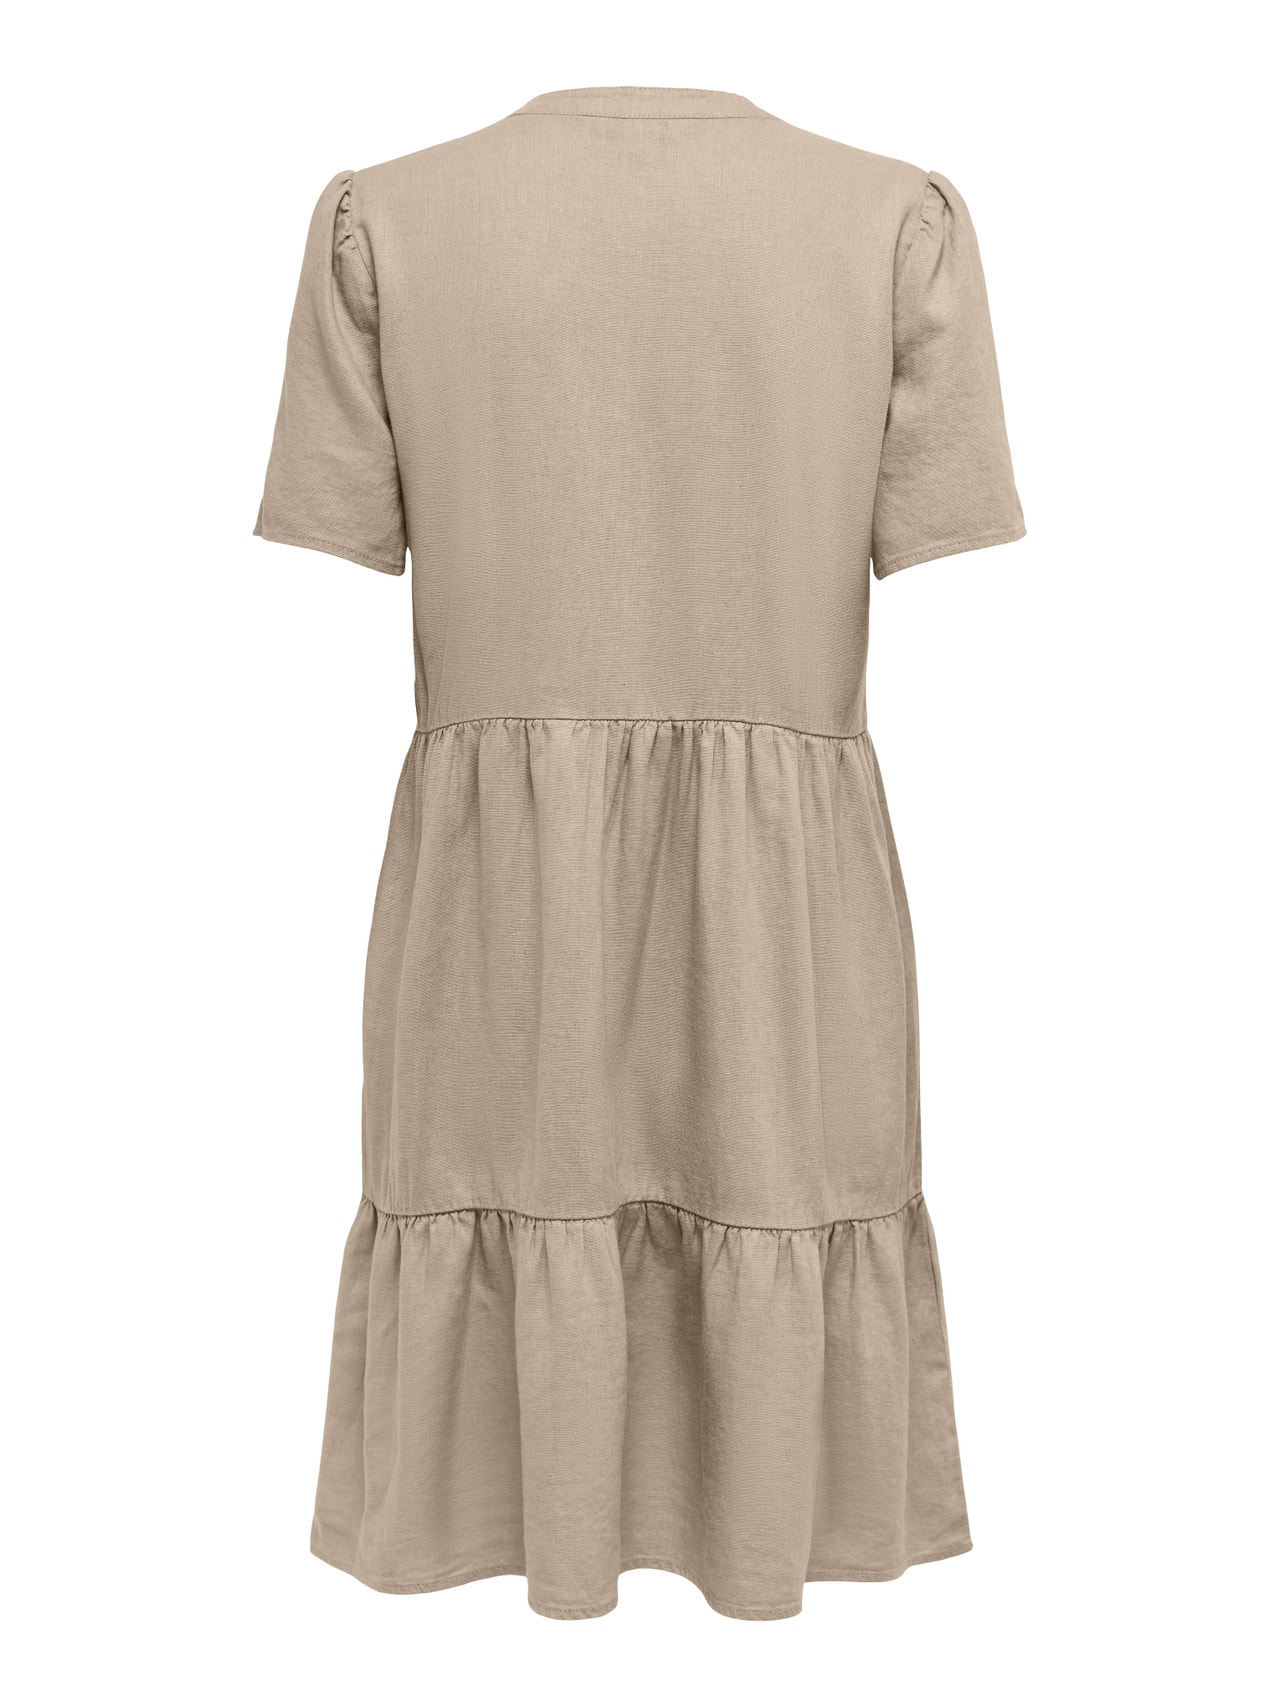 ONLY Mini v-neck dress -Oxford Tan - 15310970